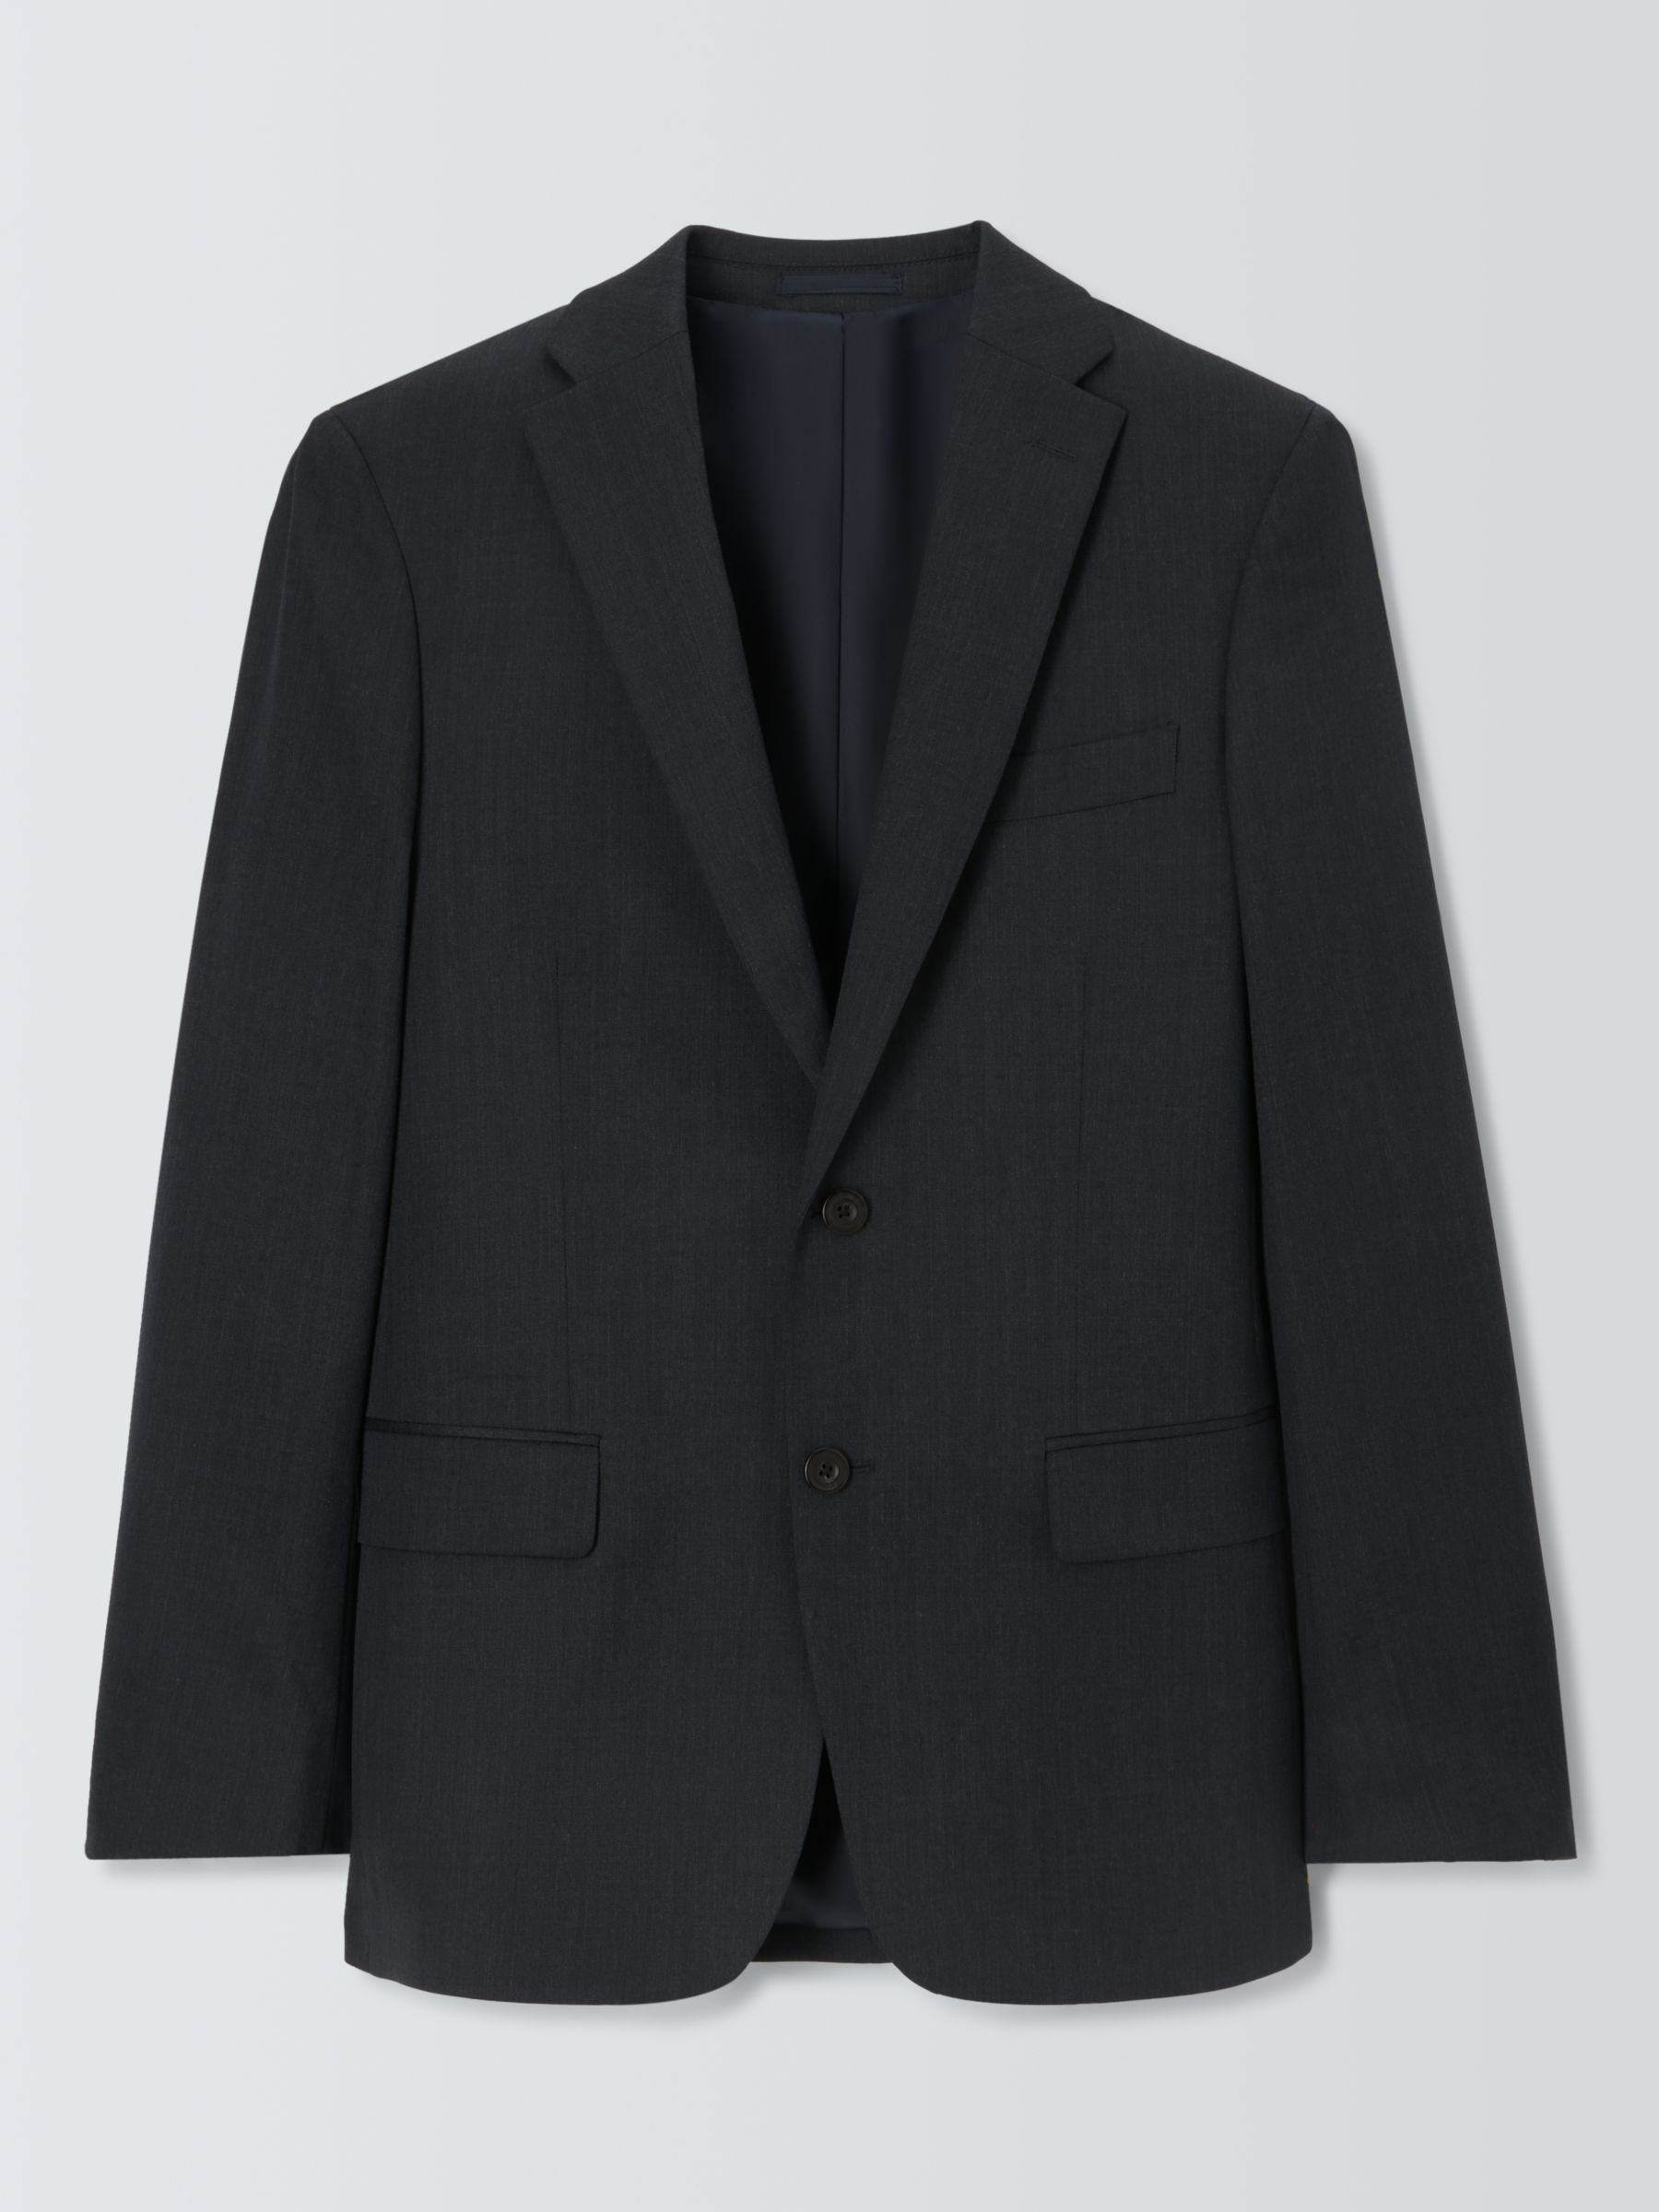 John Lewis Washable Regular Fit Suit Jacket, Charcoal at John Lewis ...